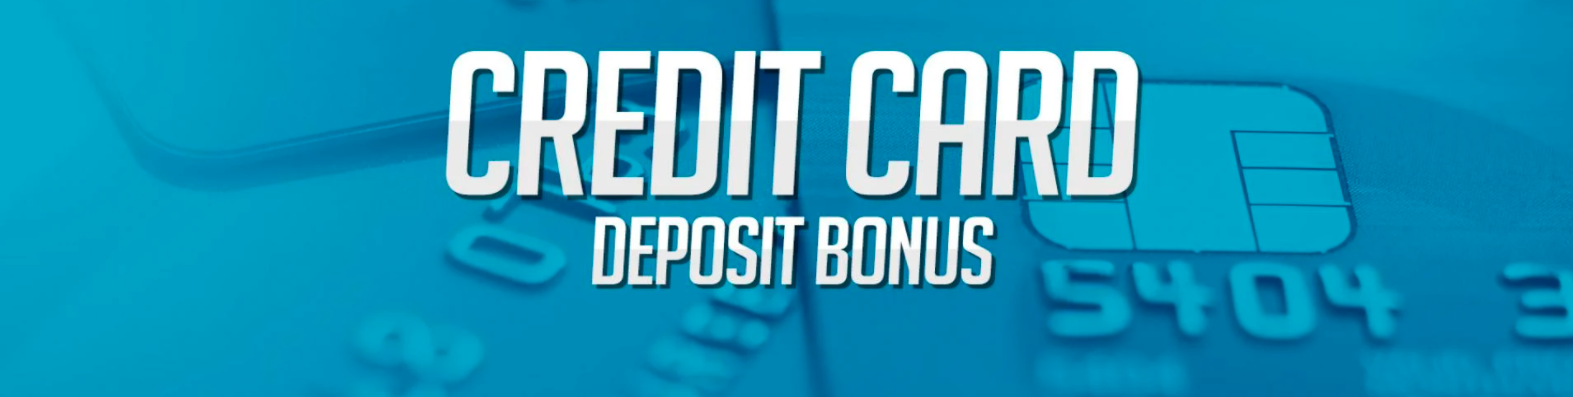 BetPhoenix Credit Card Deposit Bonus